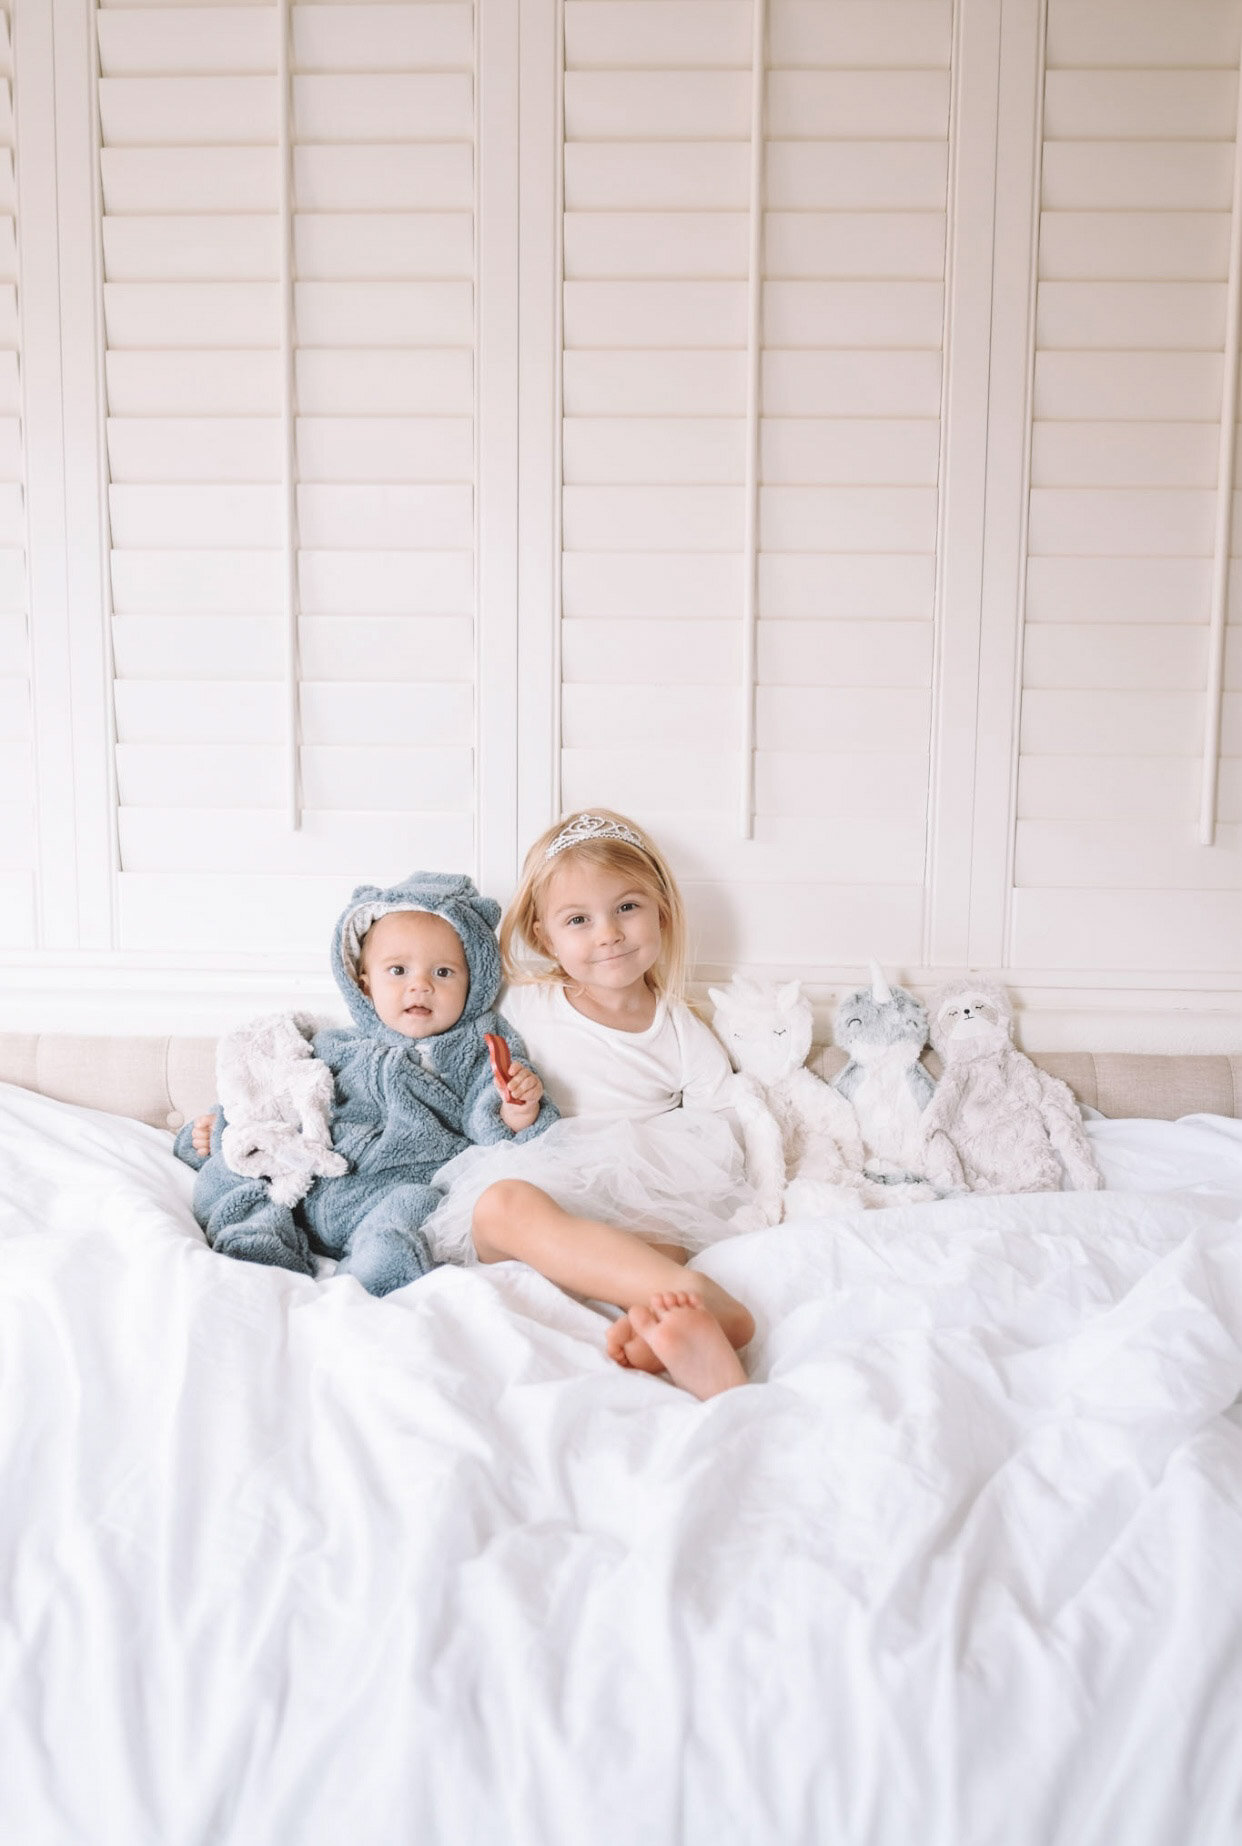 Gift Ideas for Kids + Babies - The Overwhelmed Mommy Blogger